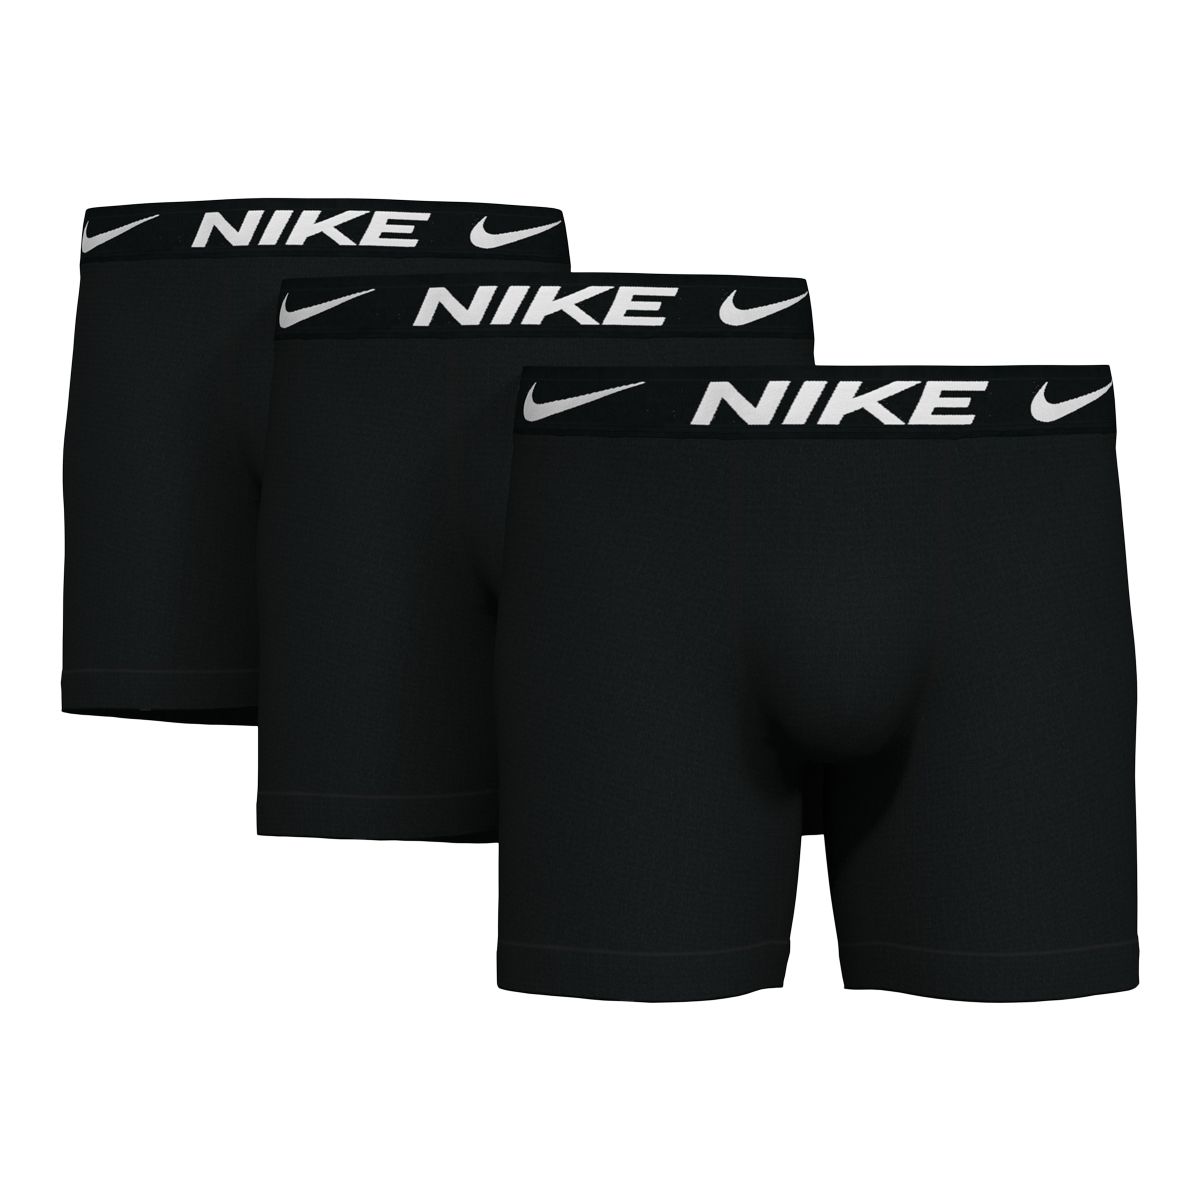 Nike Performance x 3 Men's Underwear Boxer - Electric Algae